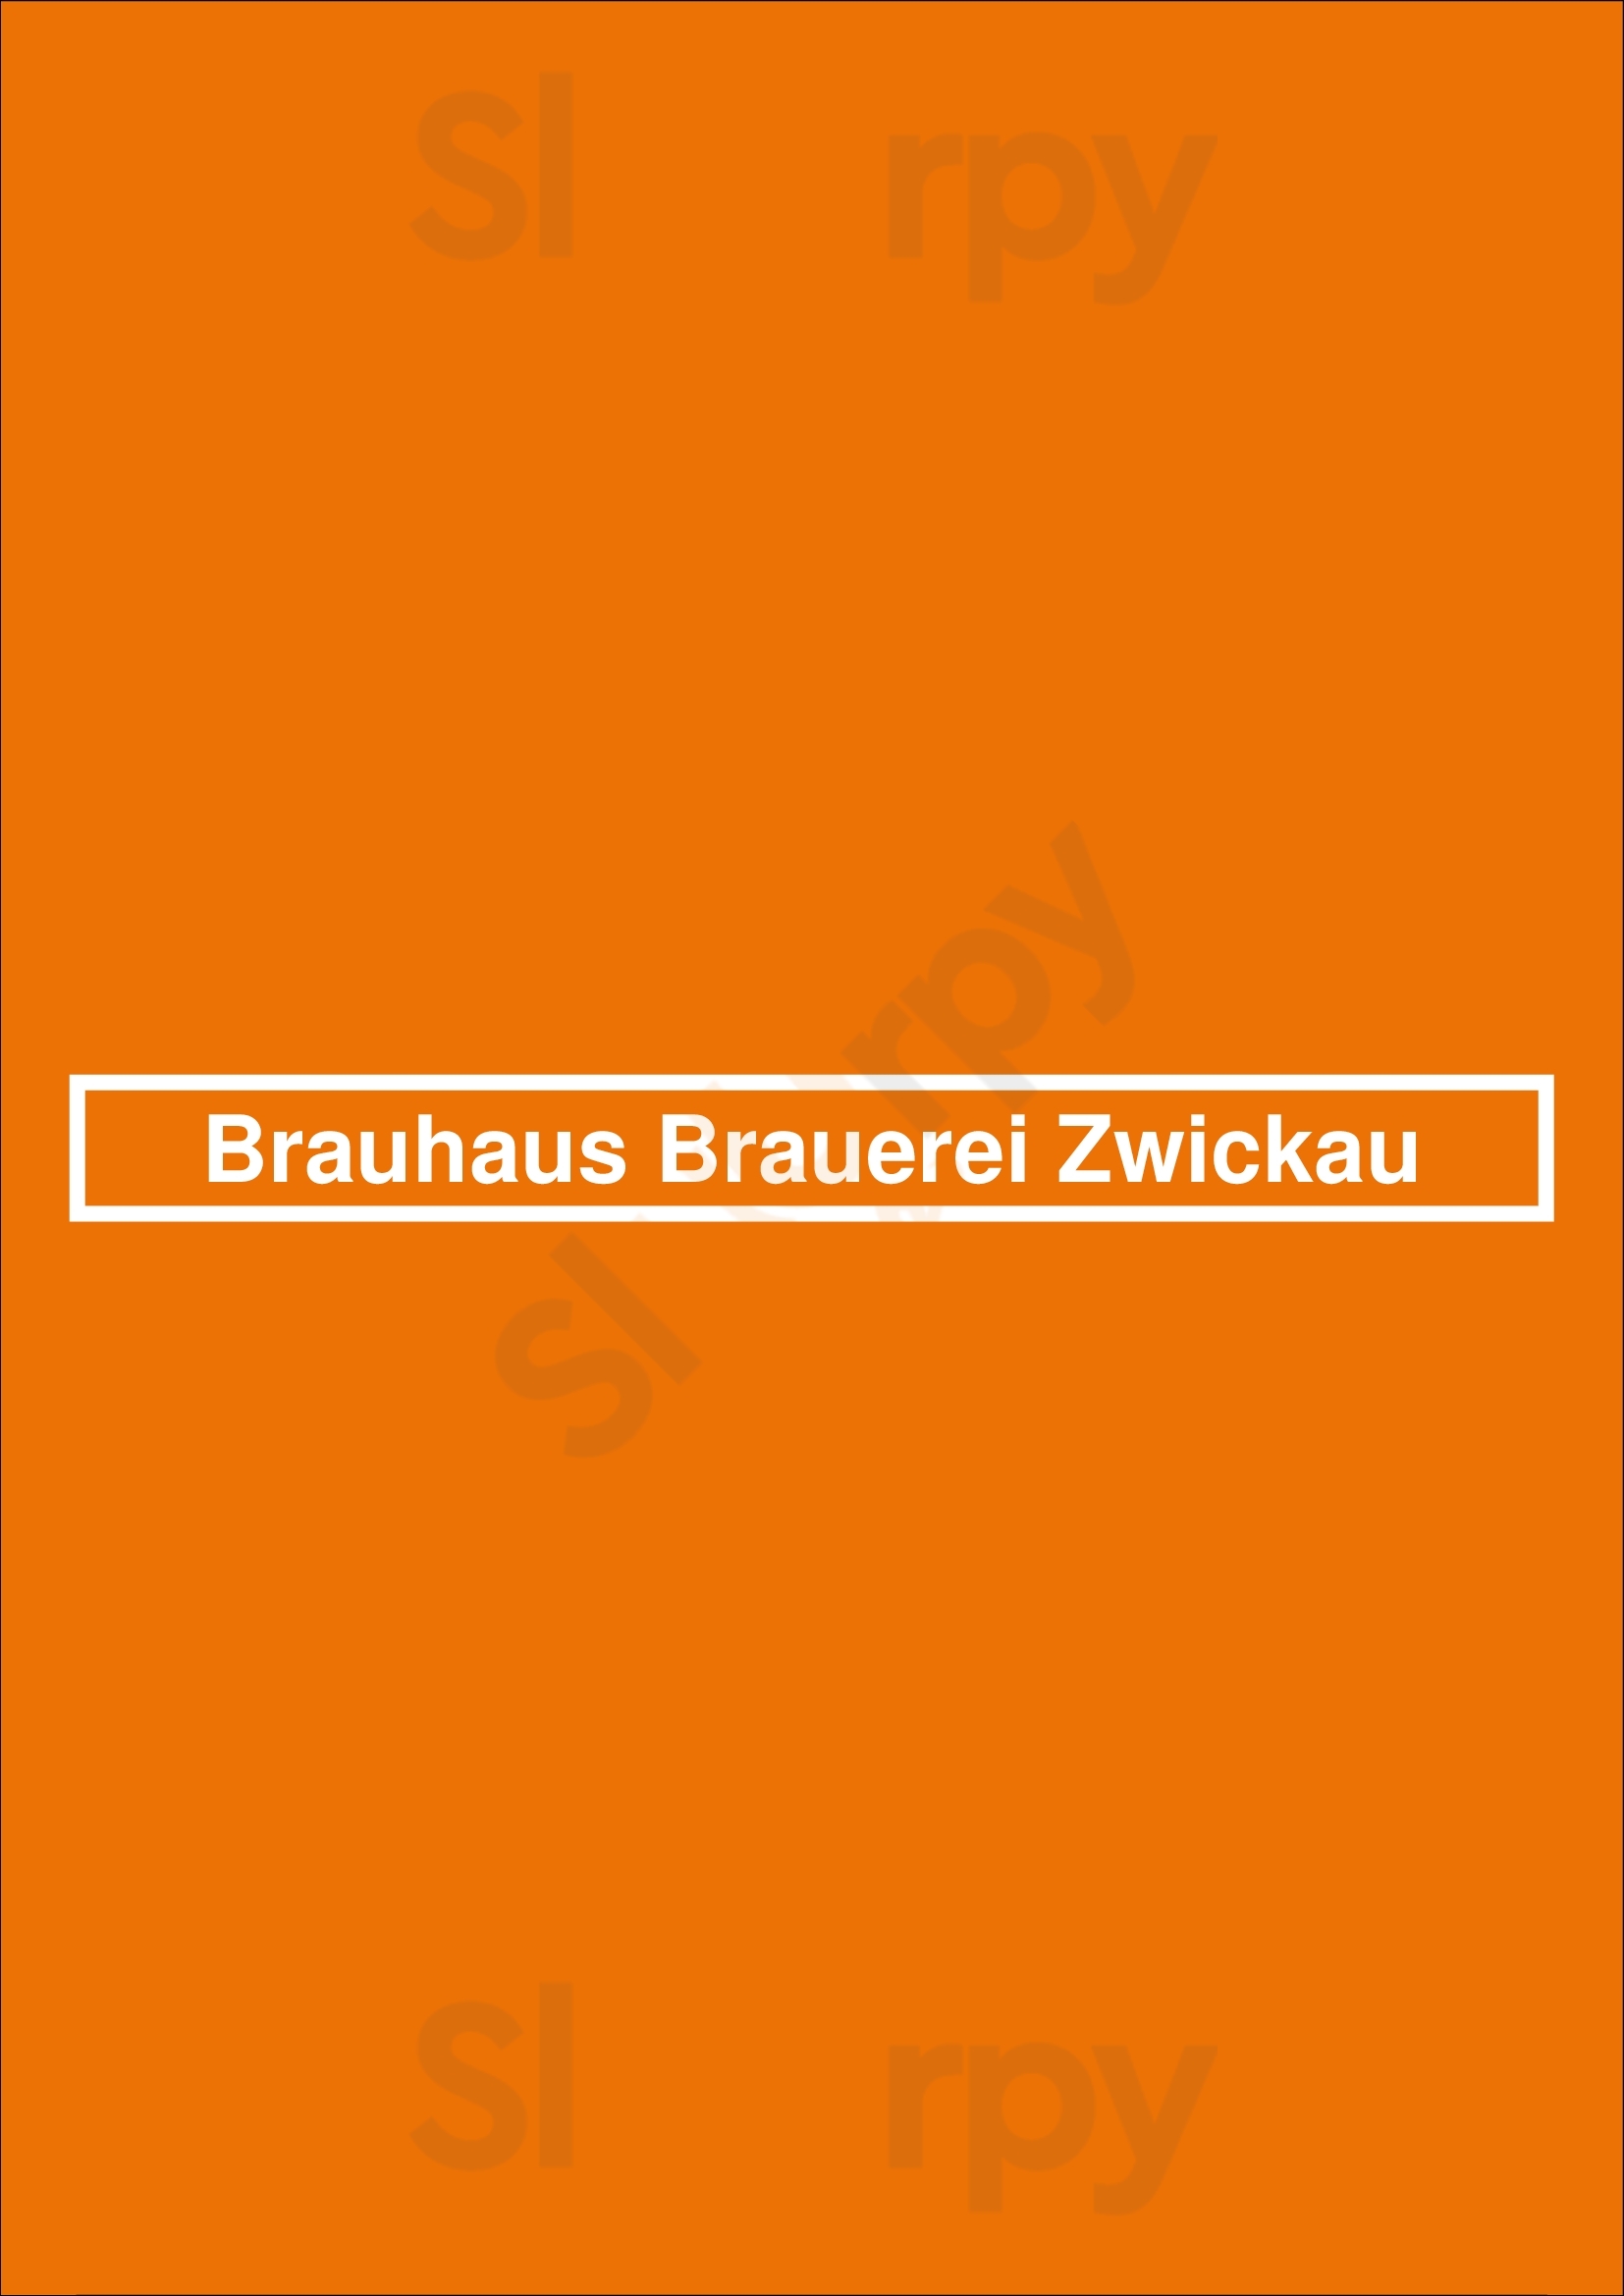 Brauhaus Brauerei Zwickau Zwickau Menu - 1